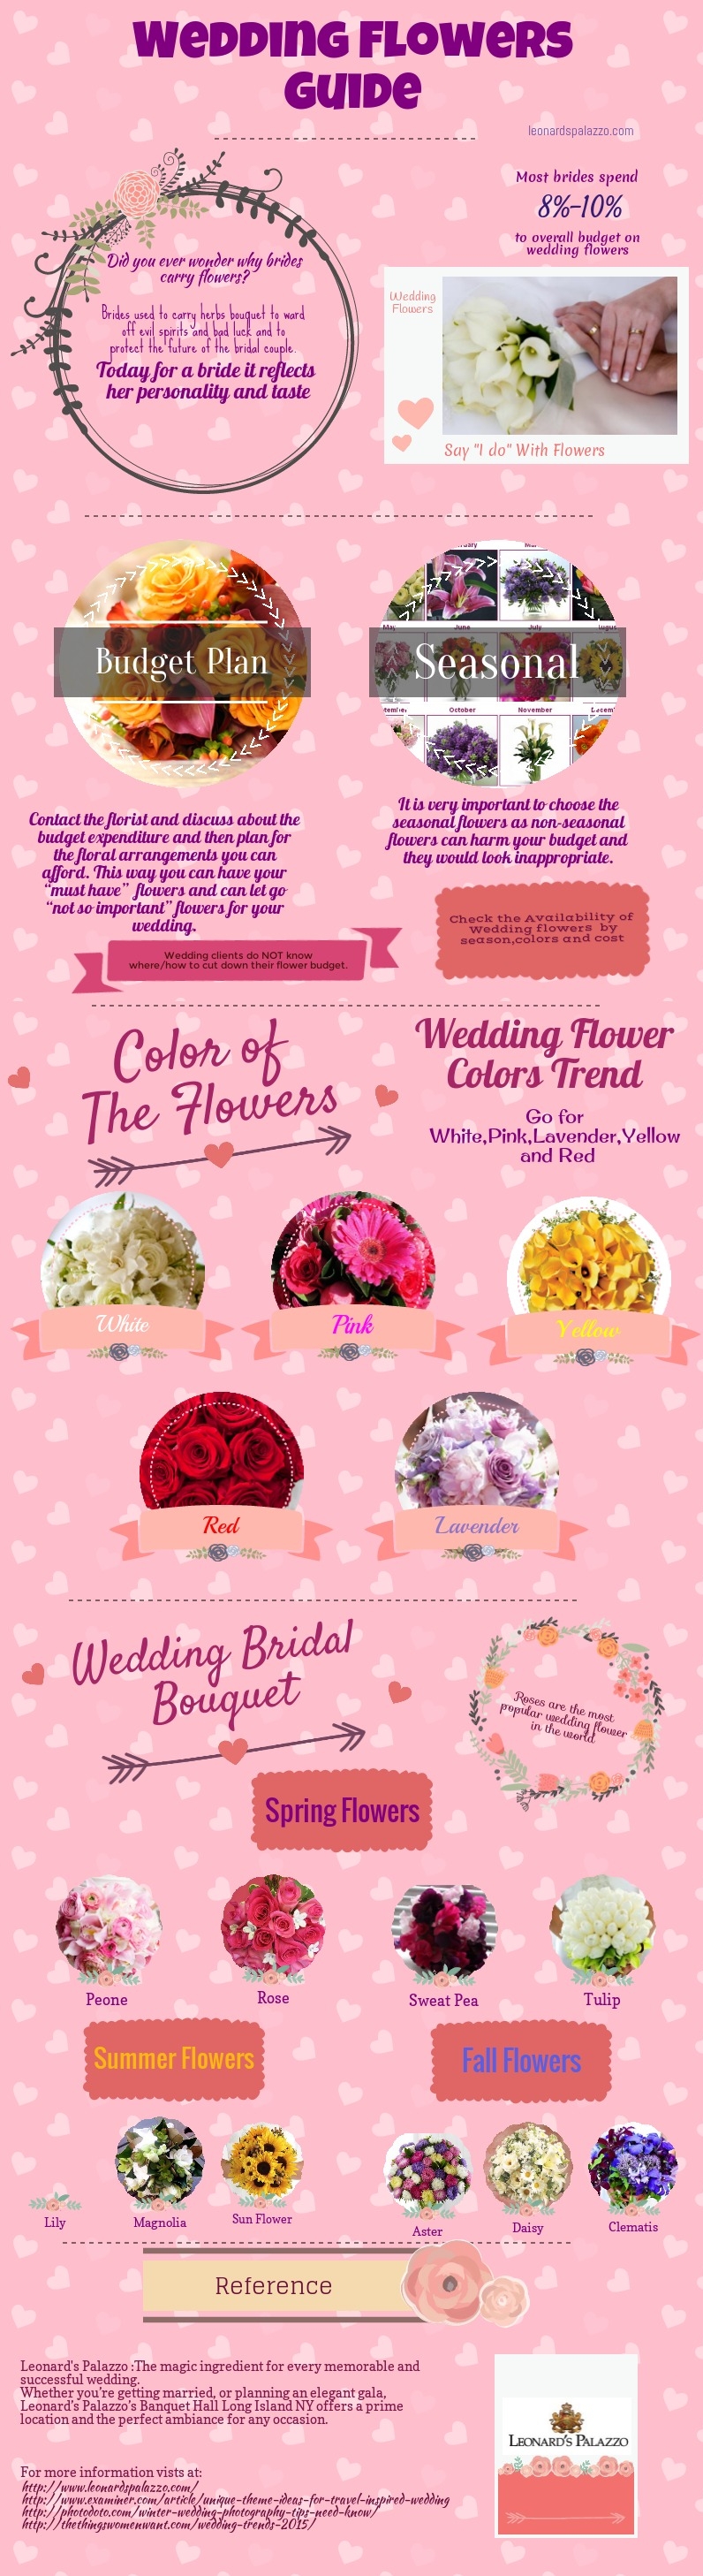 White Wedding Flowers Names Wedding Flower Guide Wedding Flower Guide